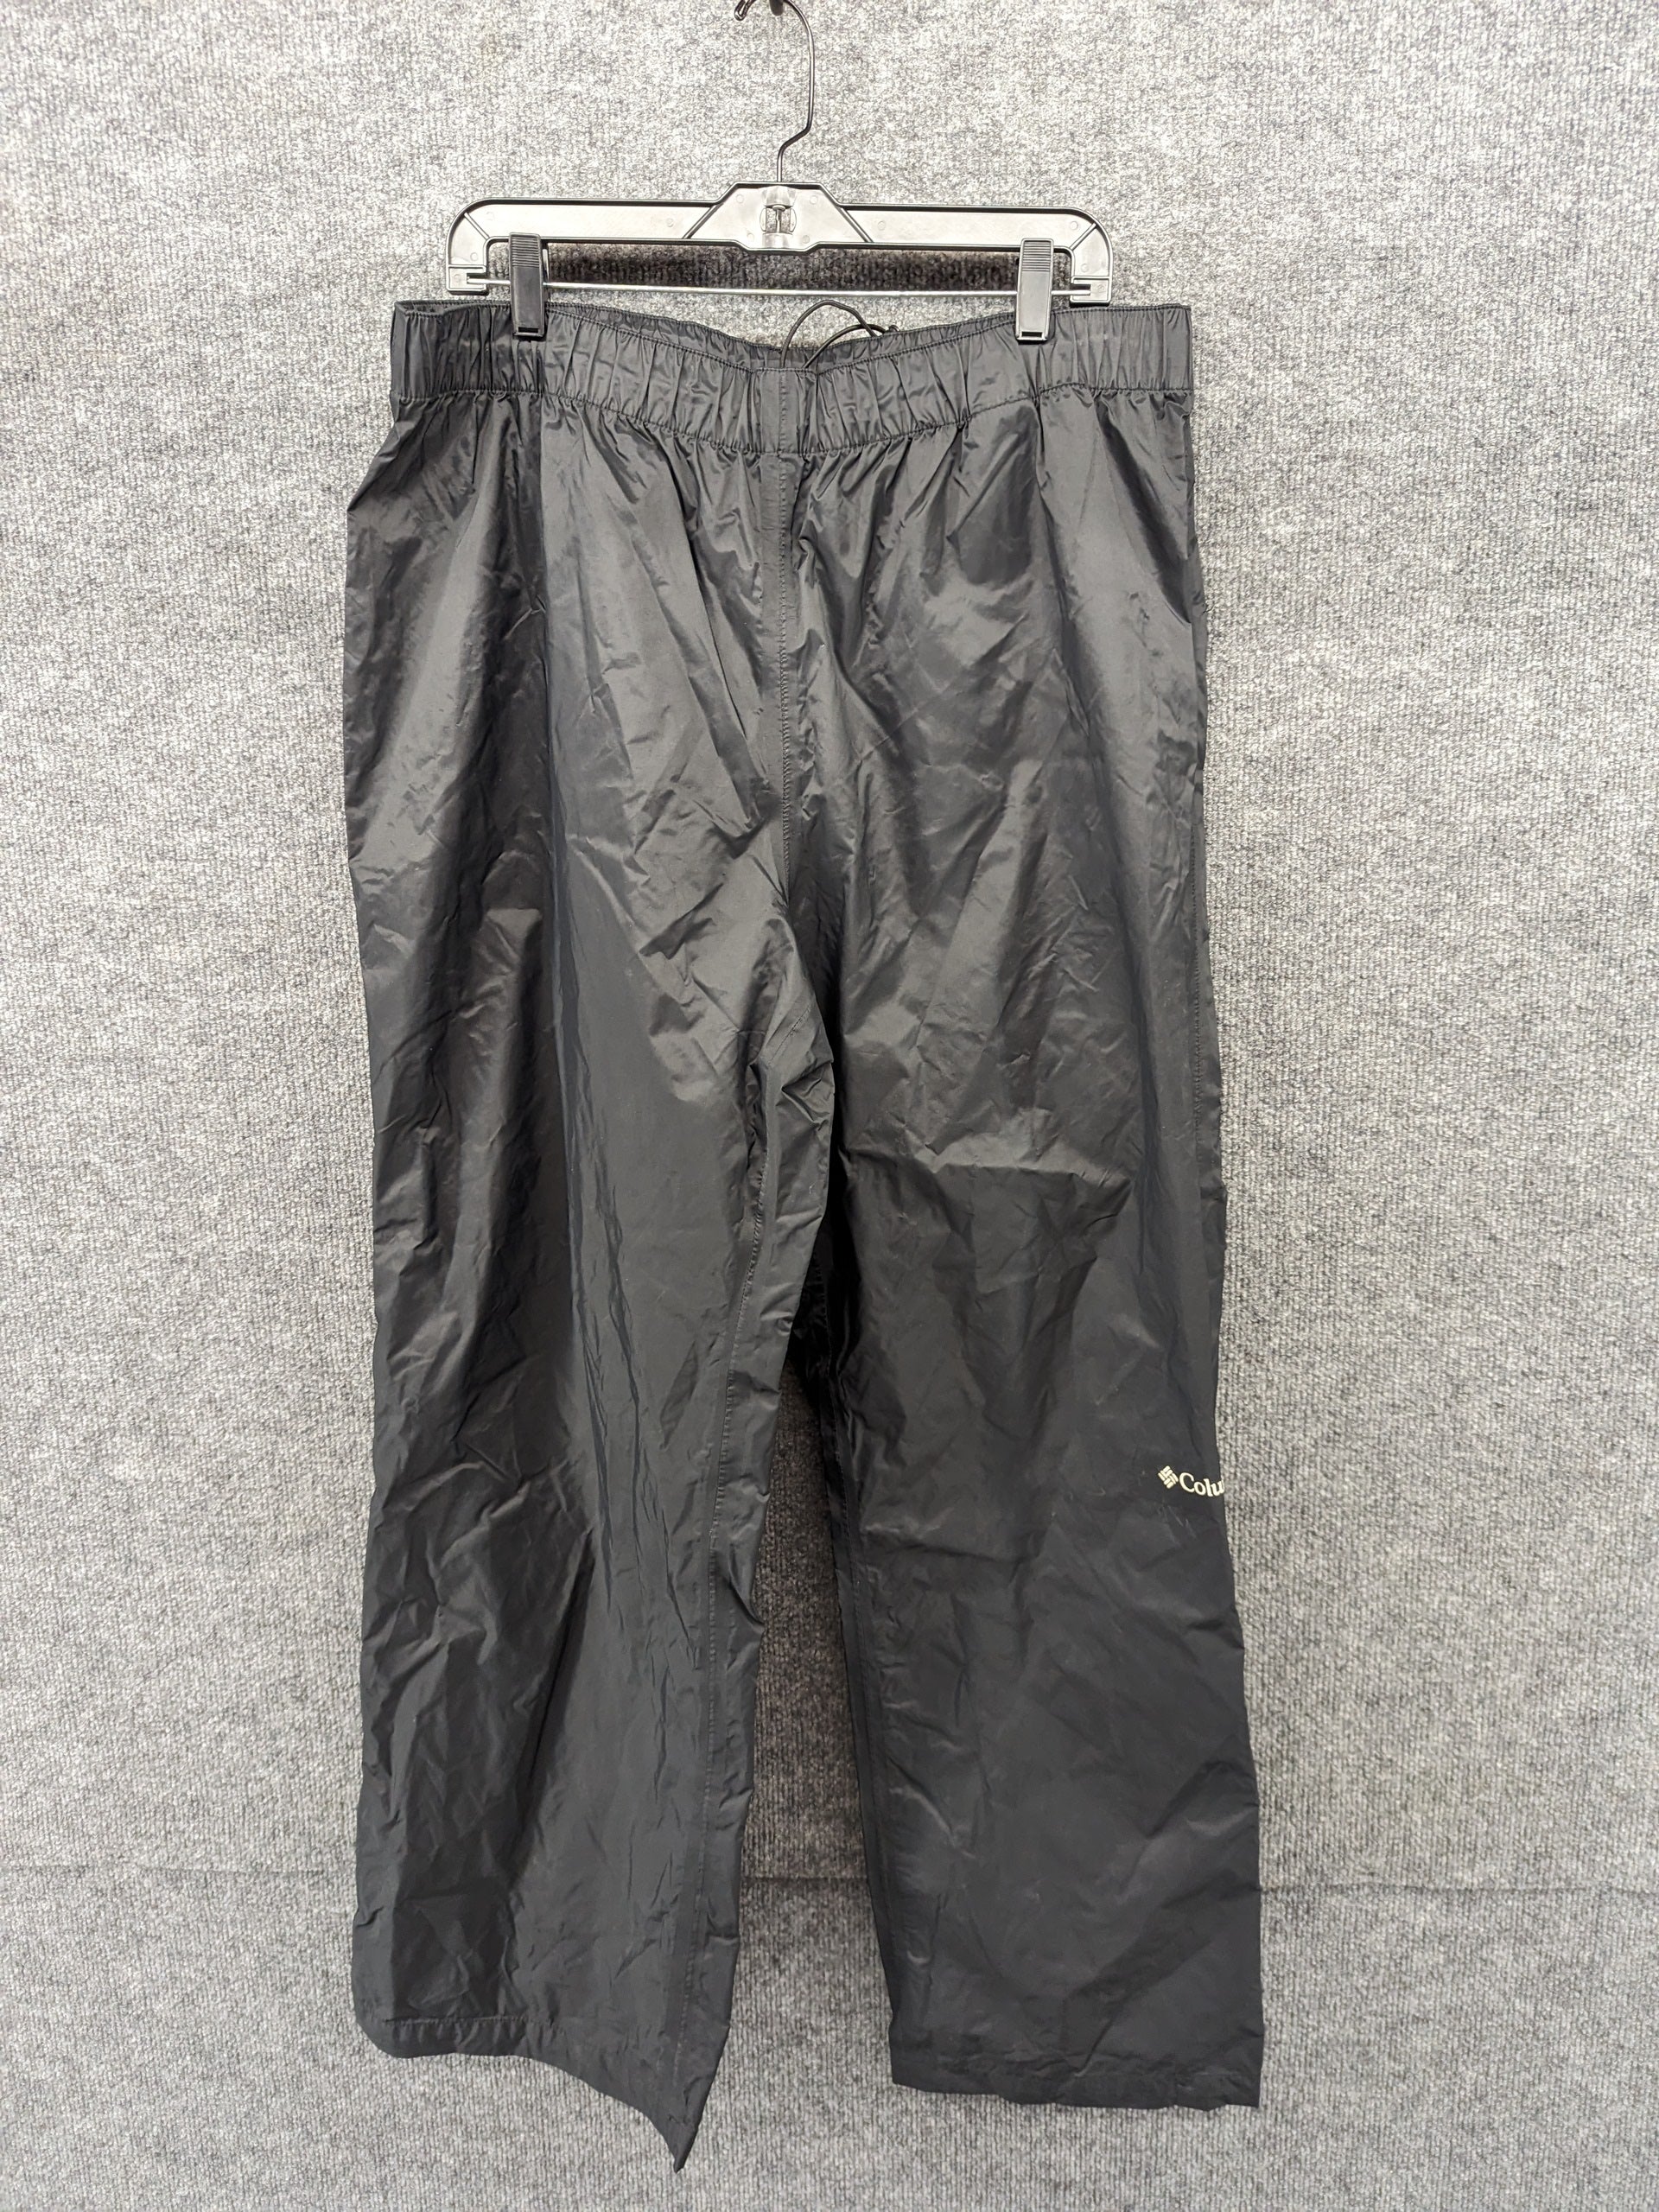 Men's Columbia Hike™ Lined Pants - Big | Columbia Sportswear